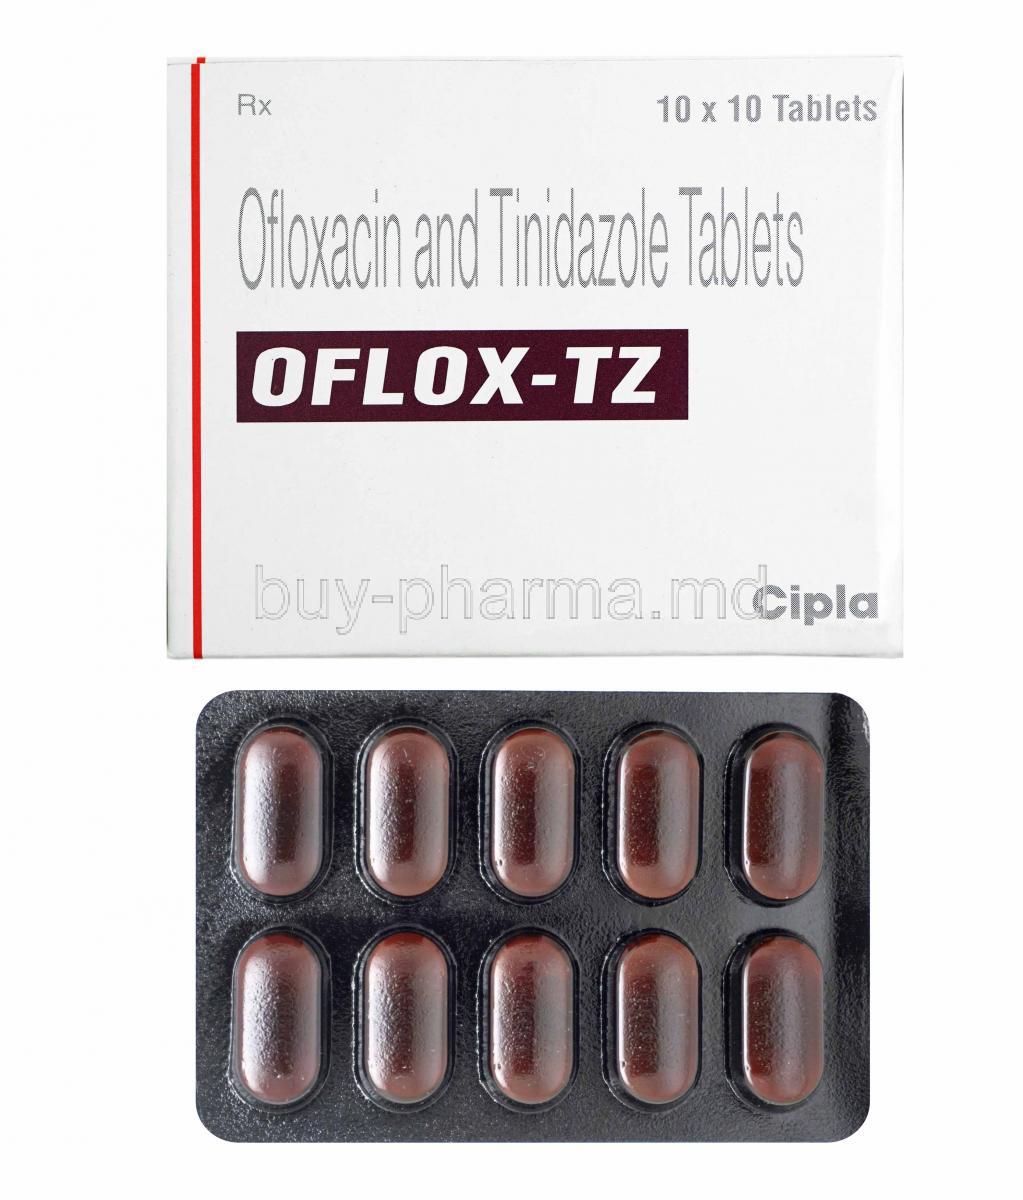 Oflox-TZ, Ofloxacin and Tinidazole box and tablets